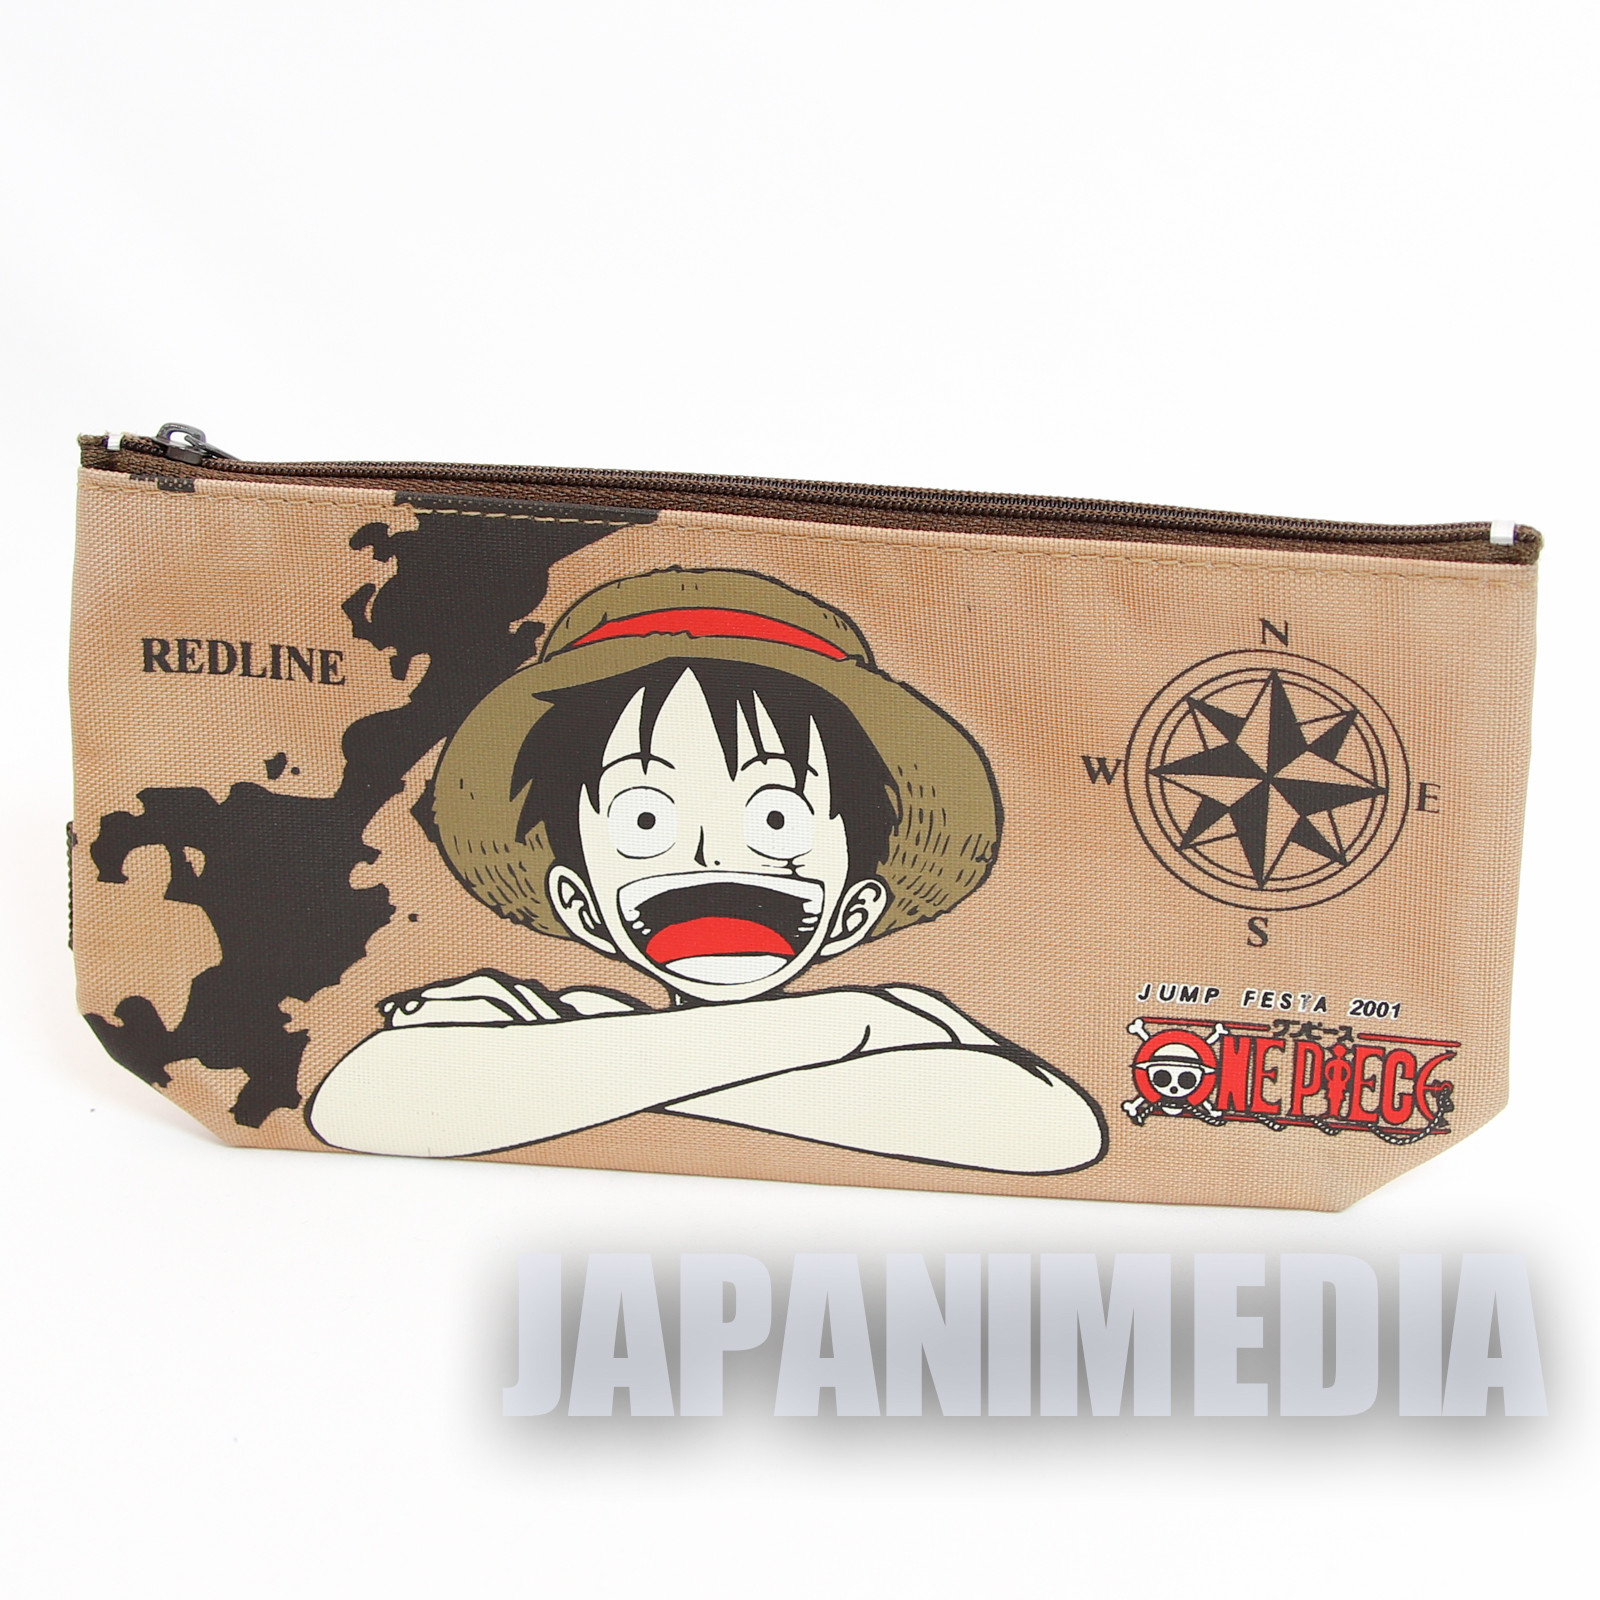 One Piece Luffy Pen Case Shonen Jump Festa 2001 JAPAN ANIME